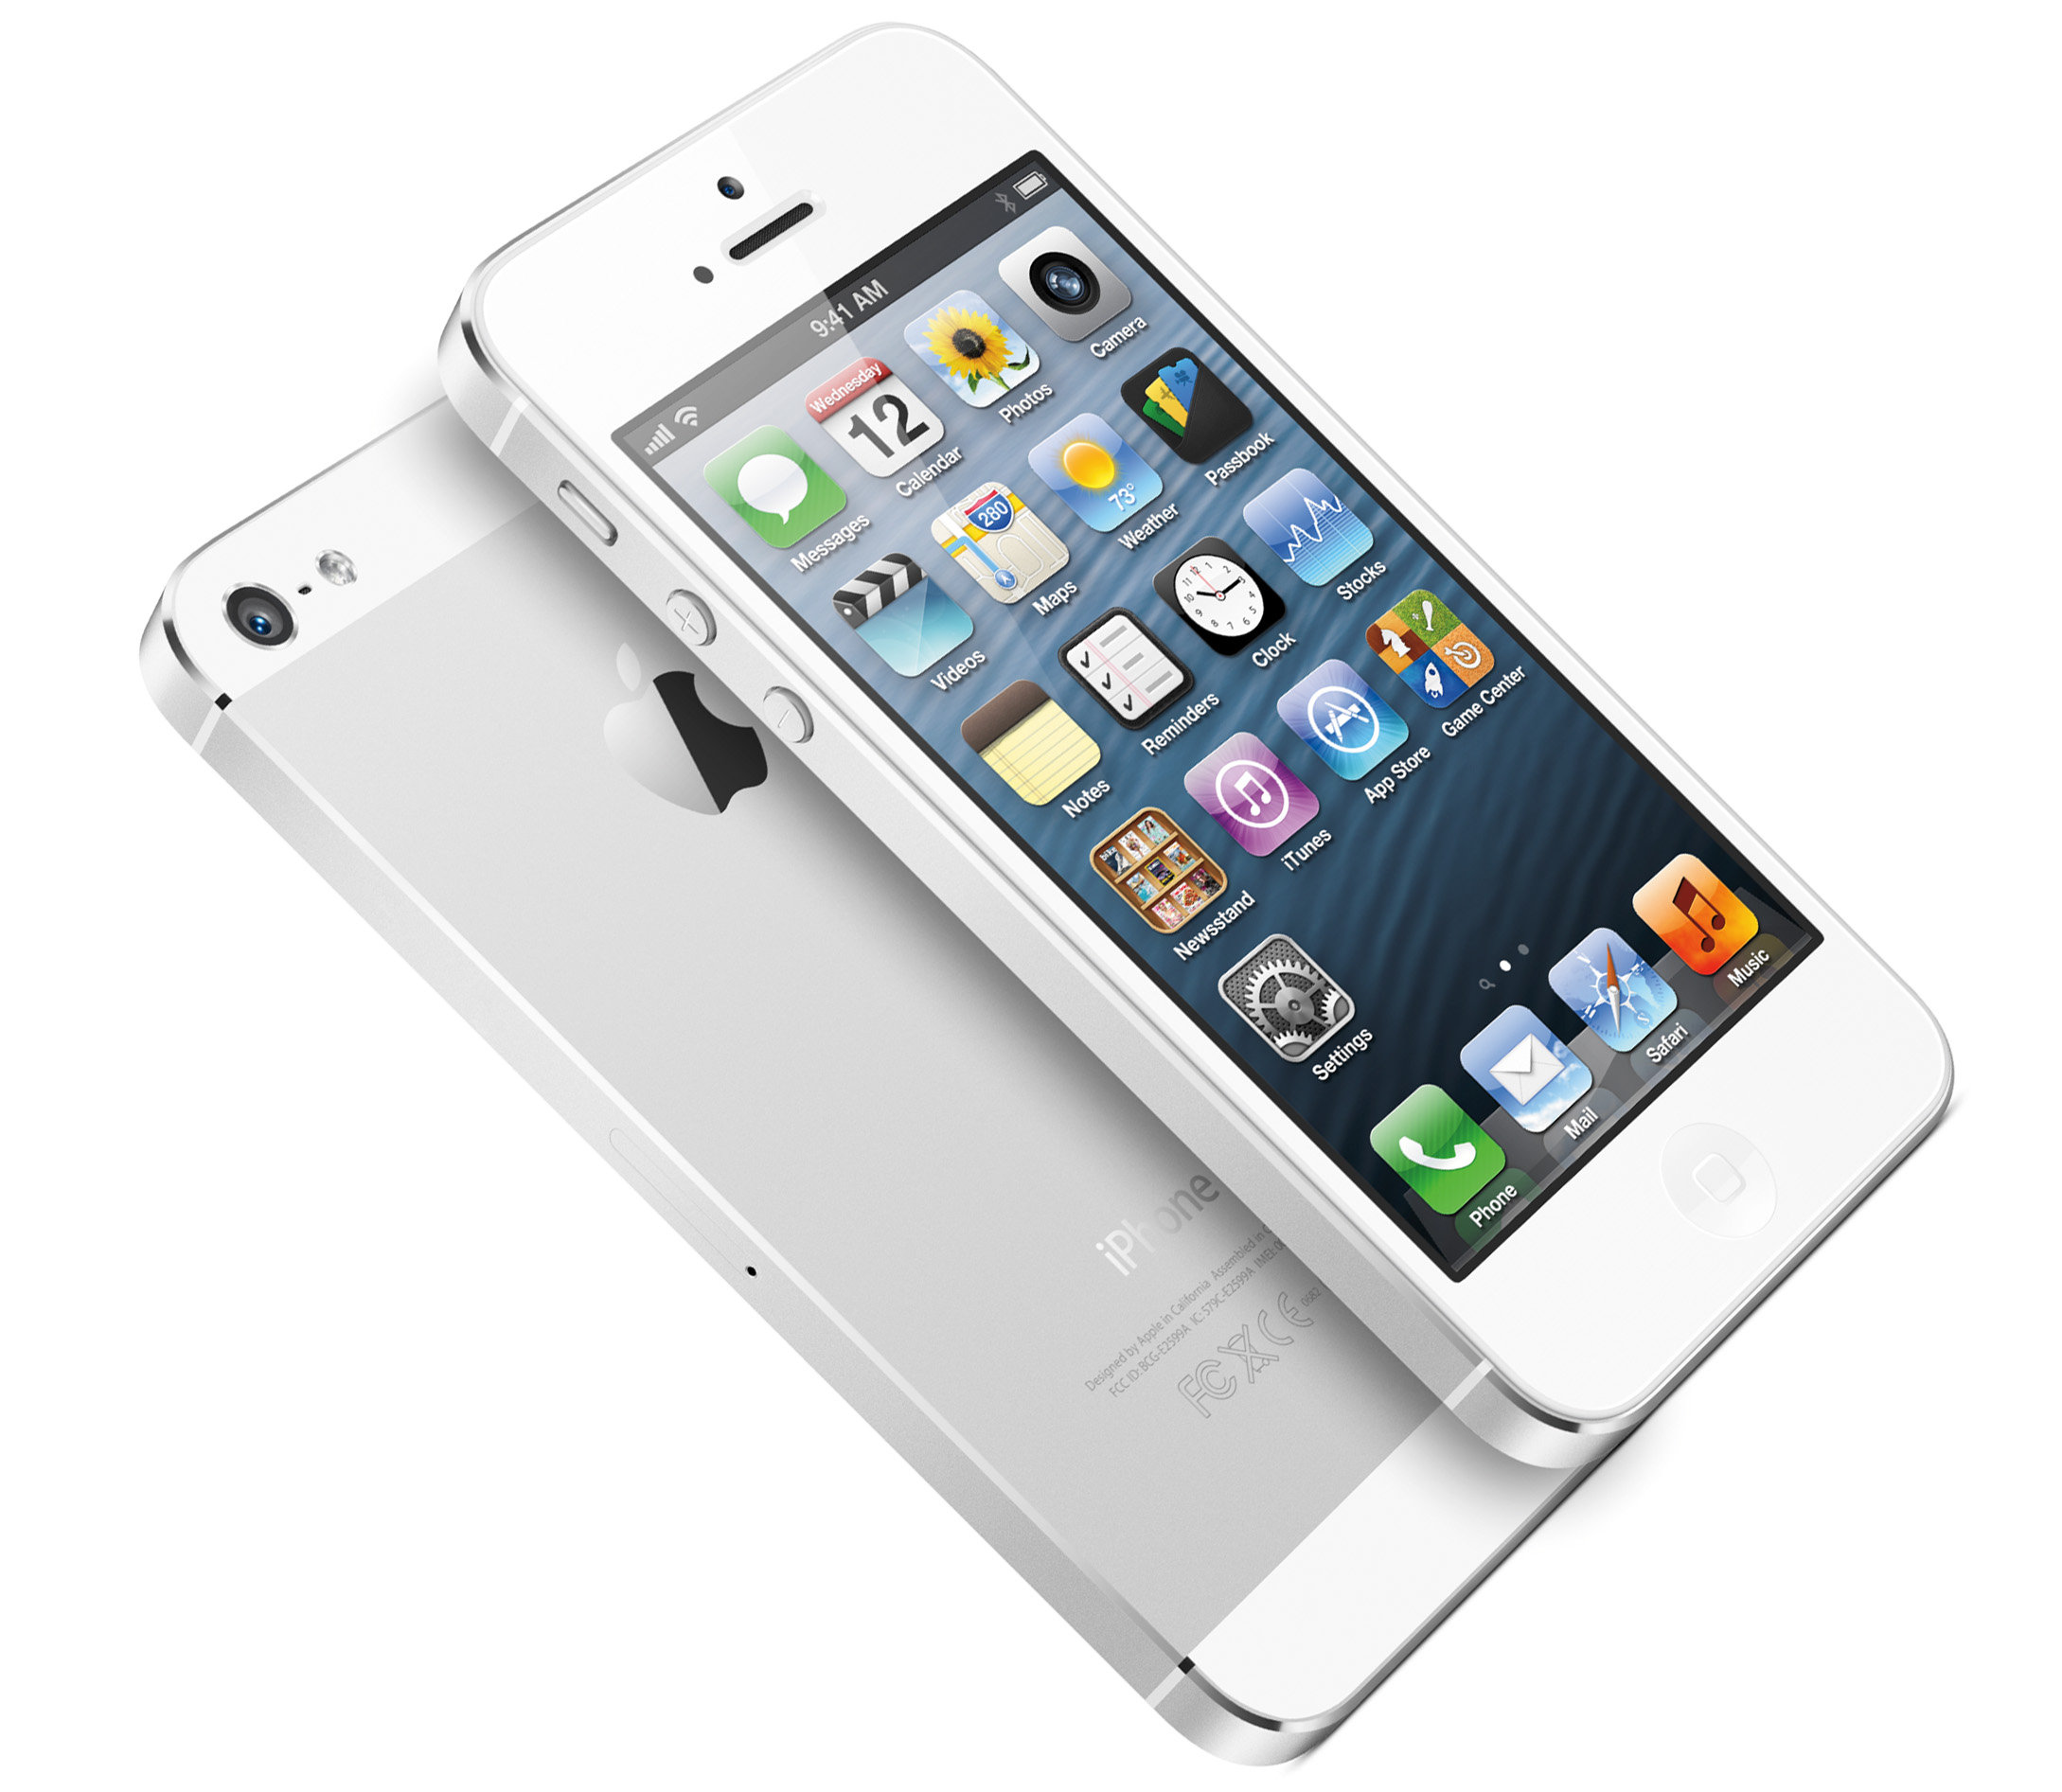 Apple iPhone 5S Preparing For December Production Test [Rumor]